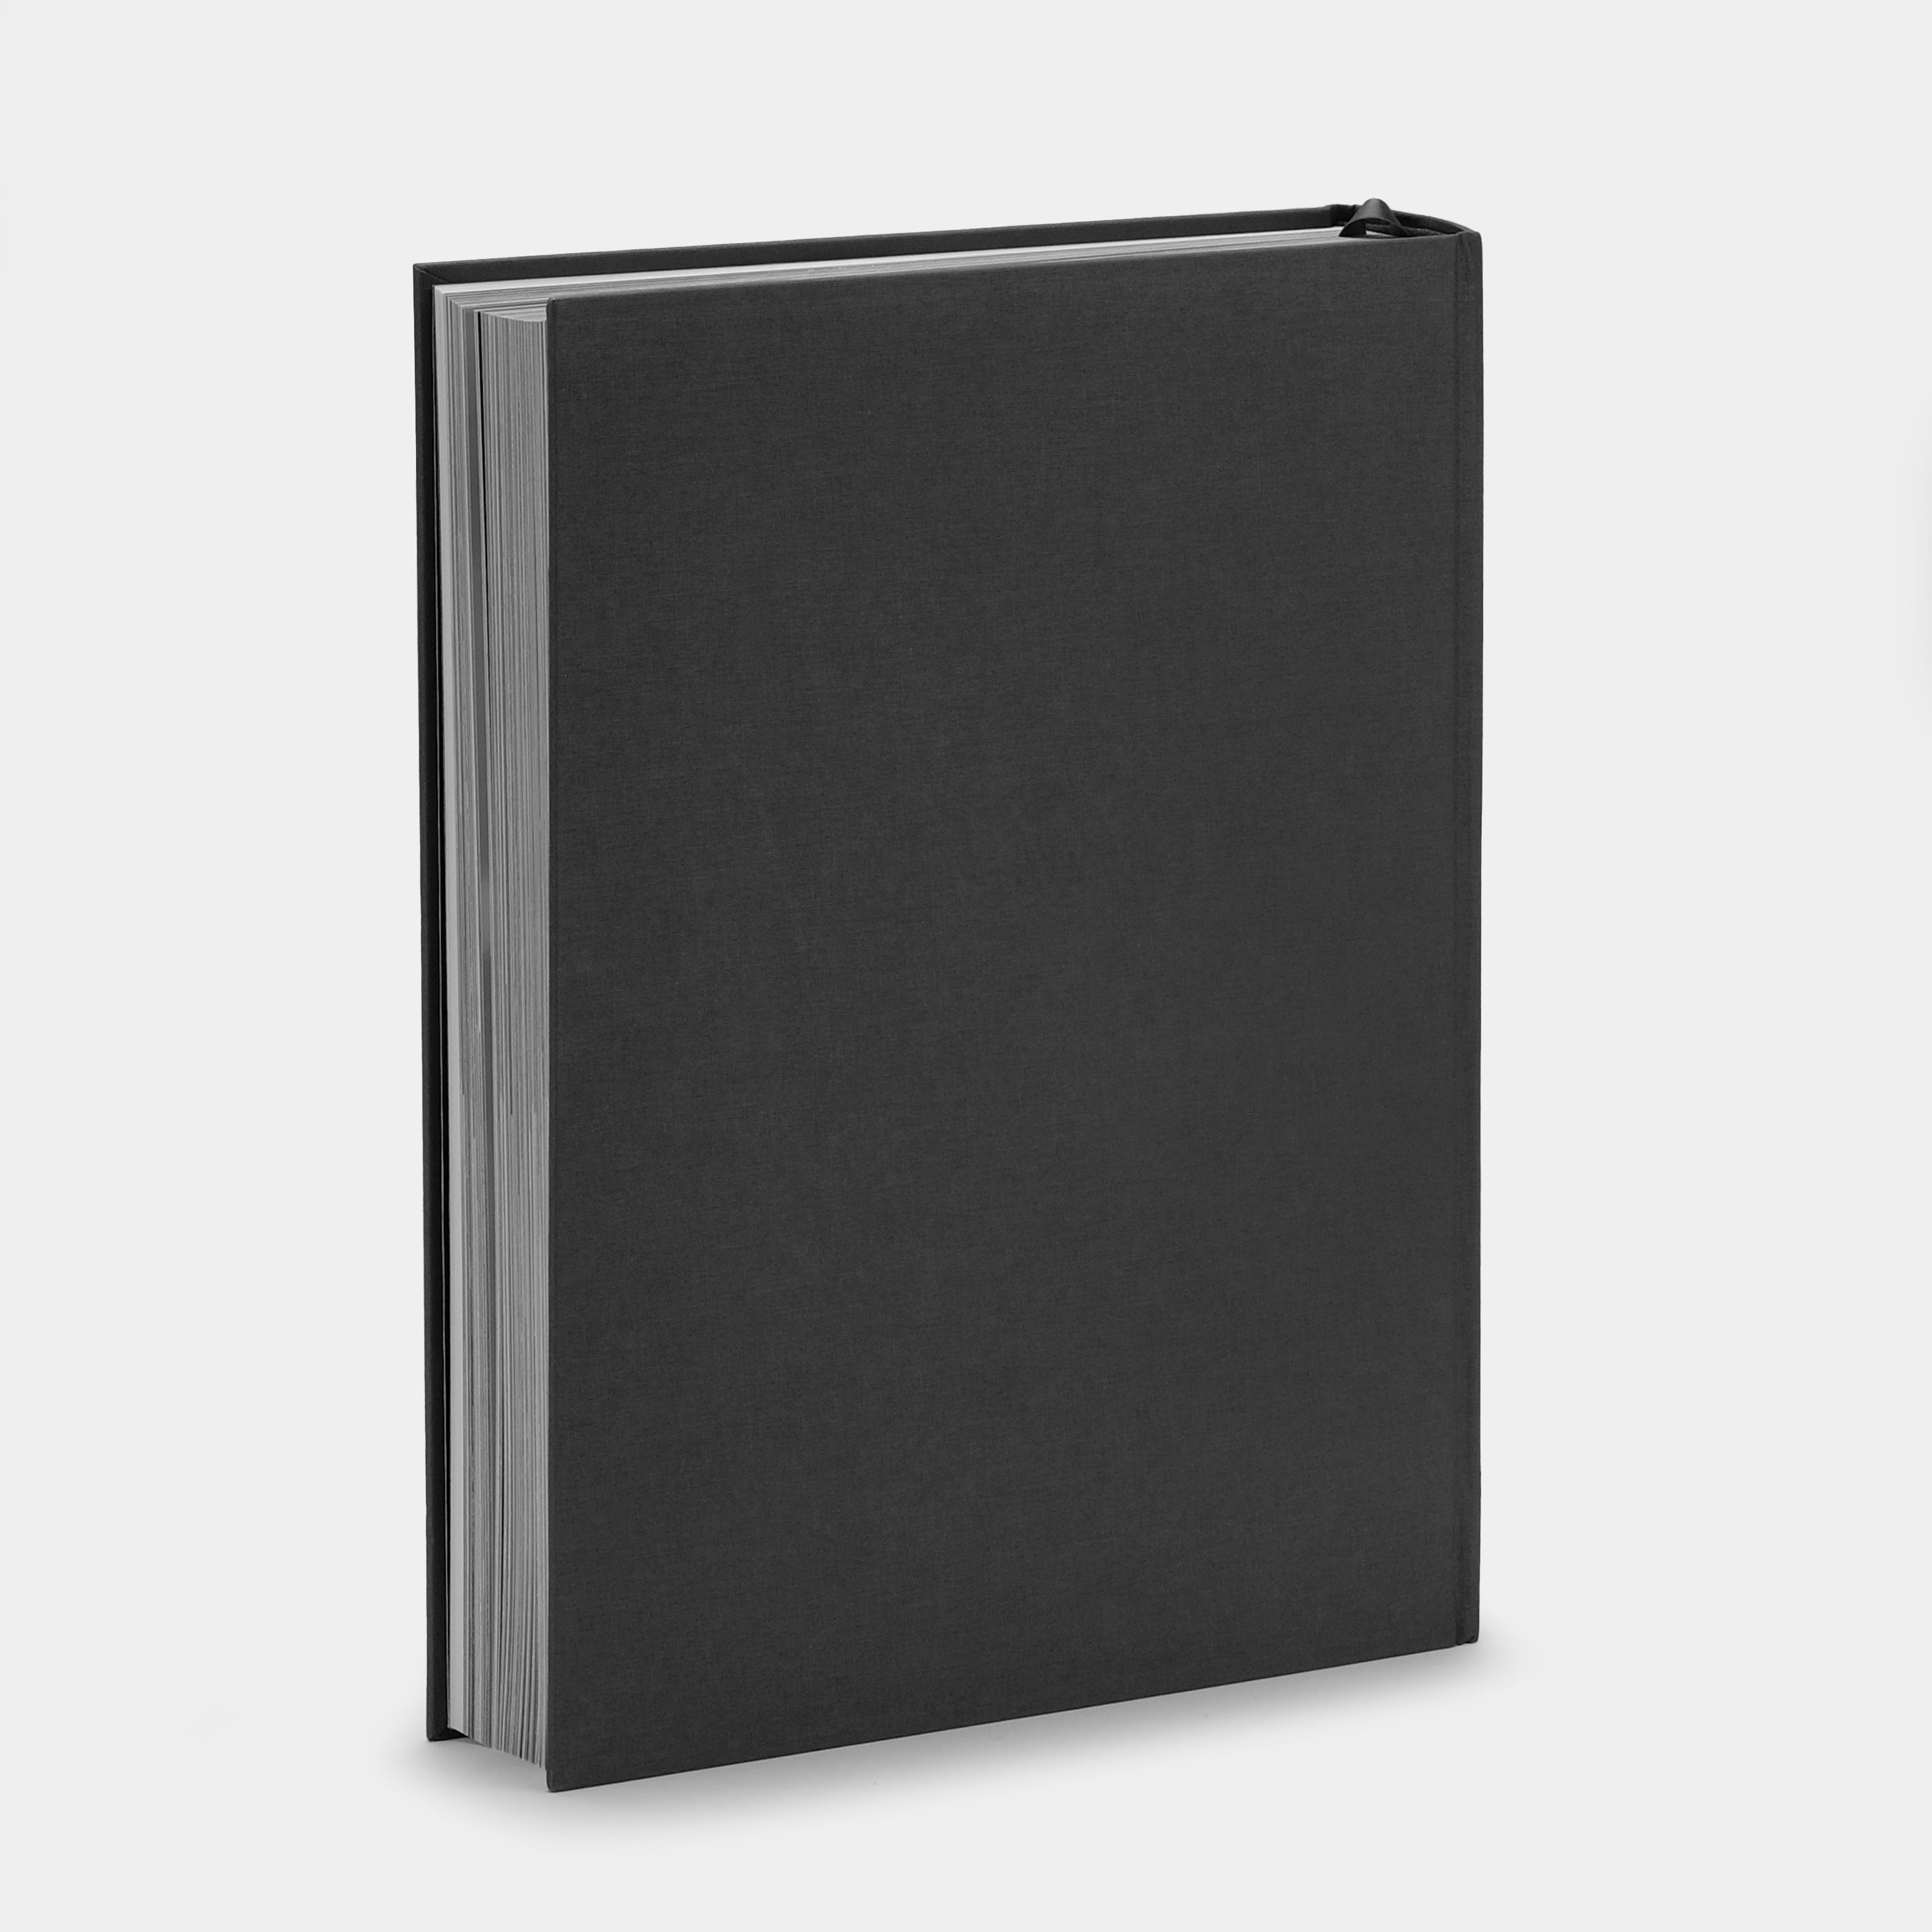 Ando: Complete Works 1975–Today (2023 Edition) XXL Taschen Book